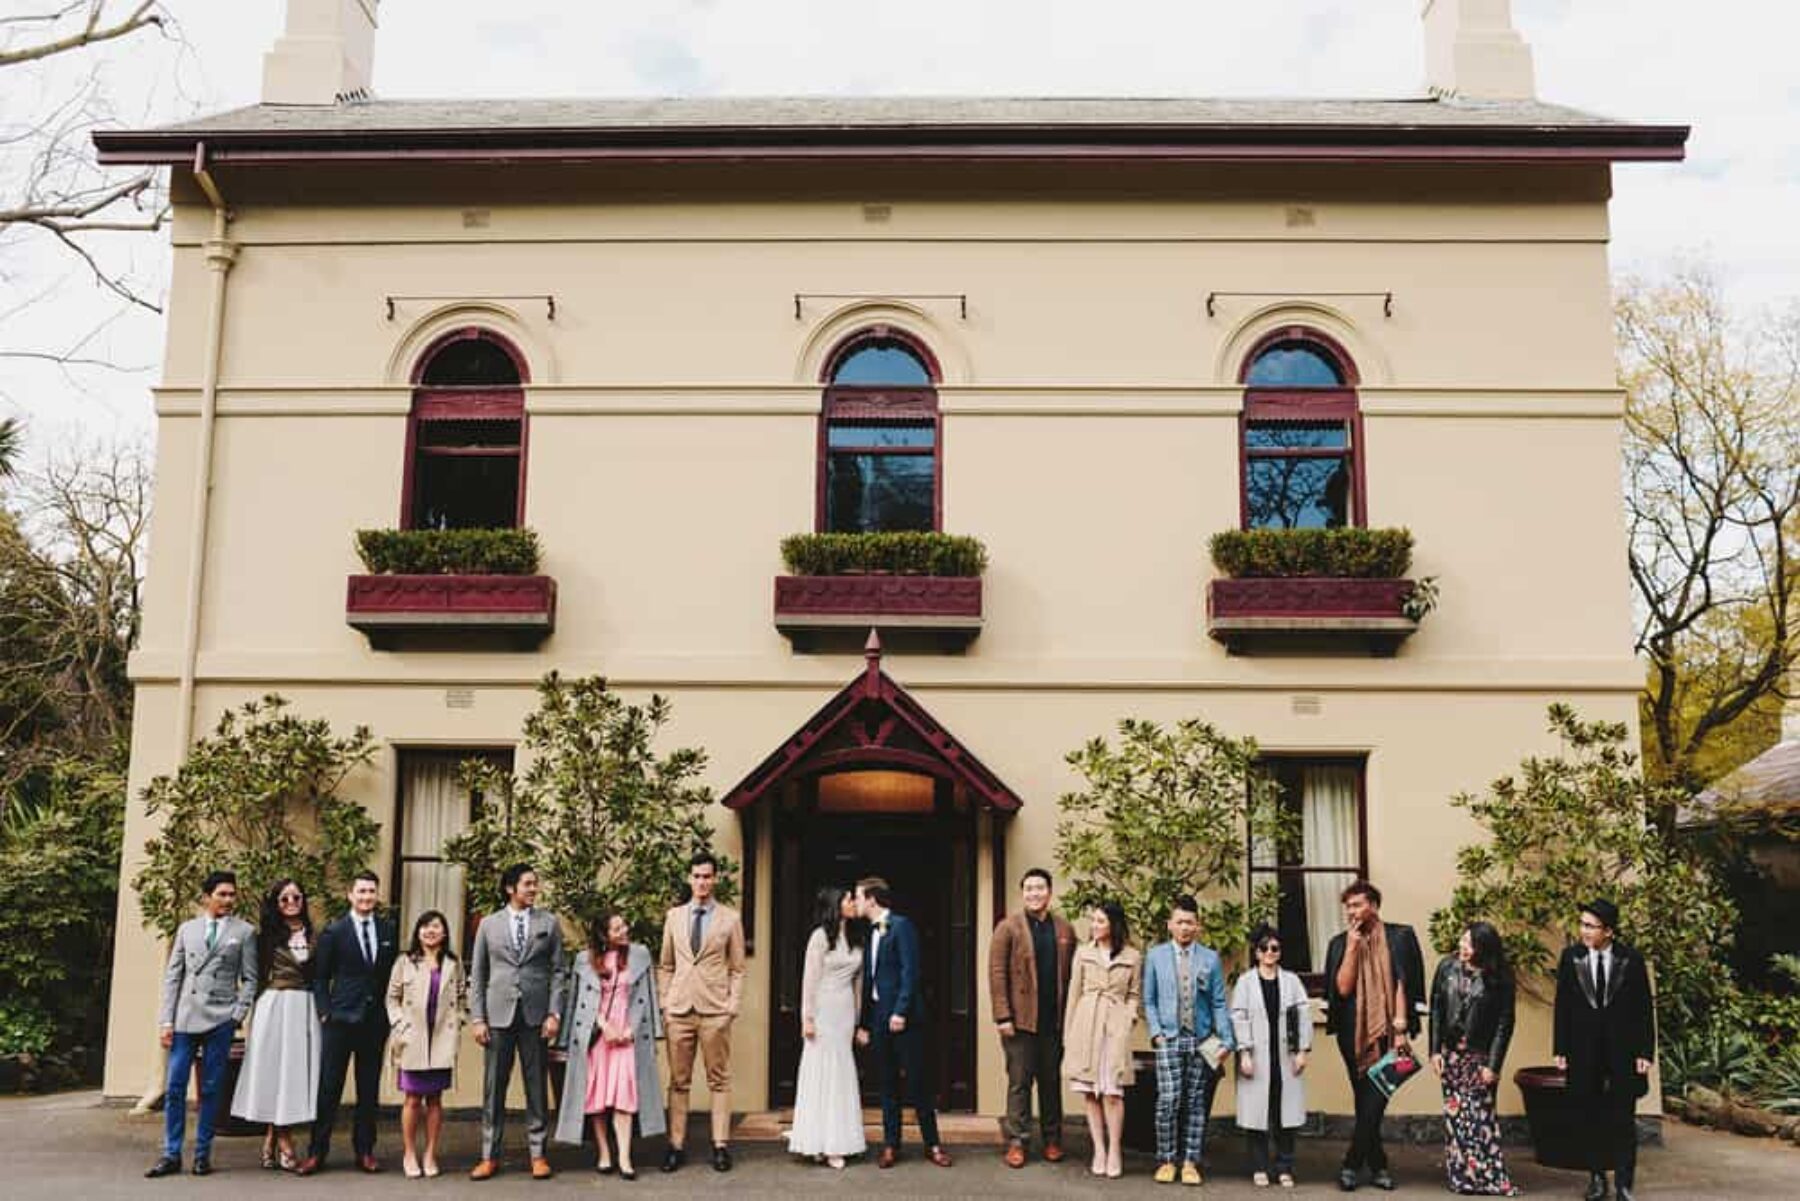 Melbourne Royal Botanic Gardens wedding / Photography by Jonathan Ong